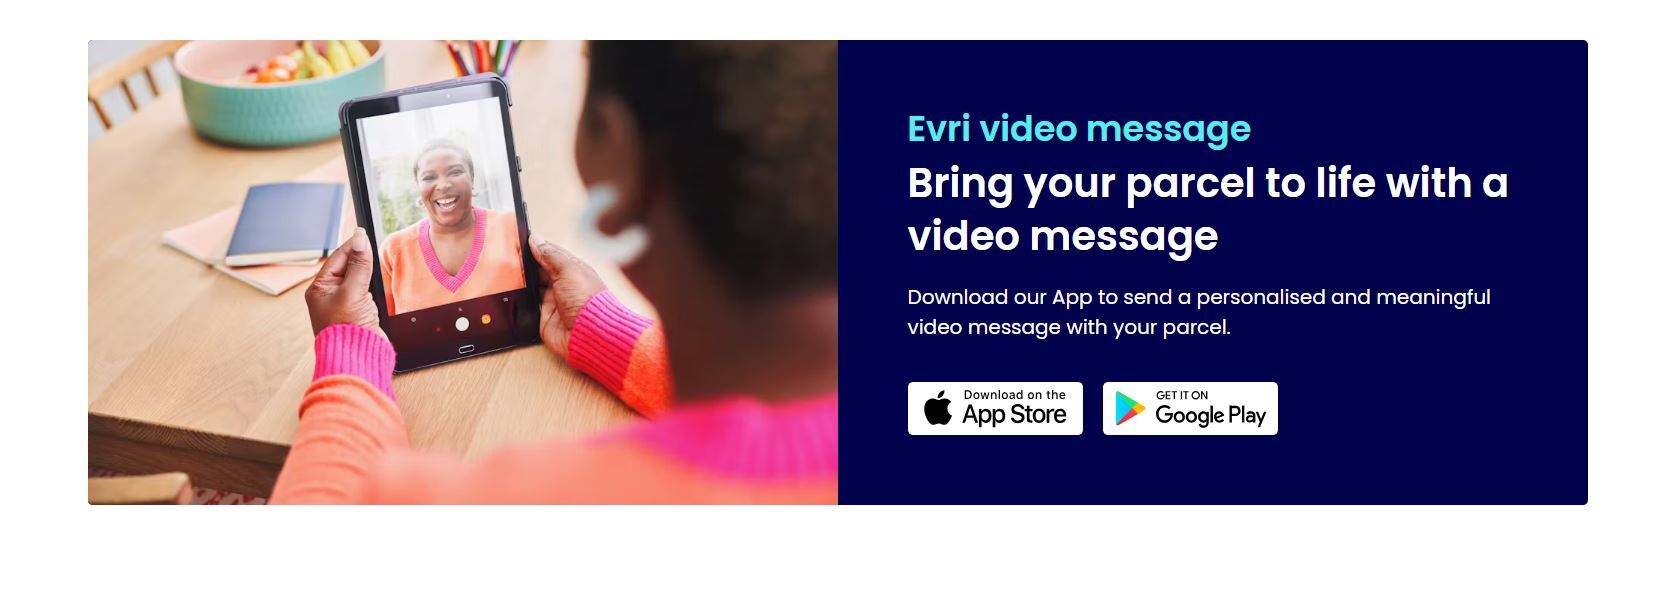 Evri app video